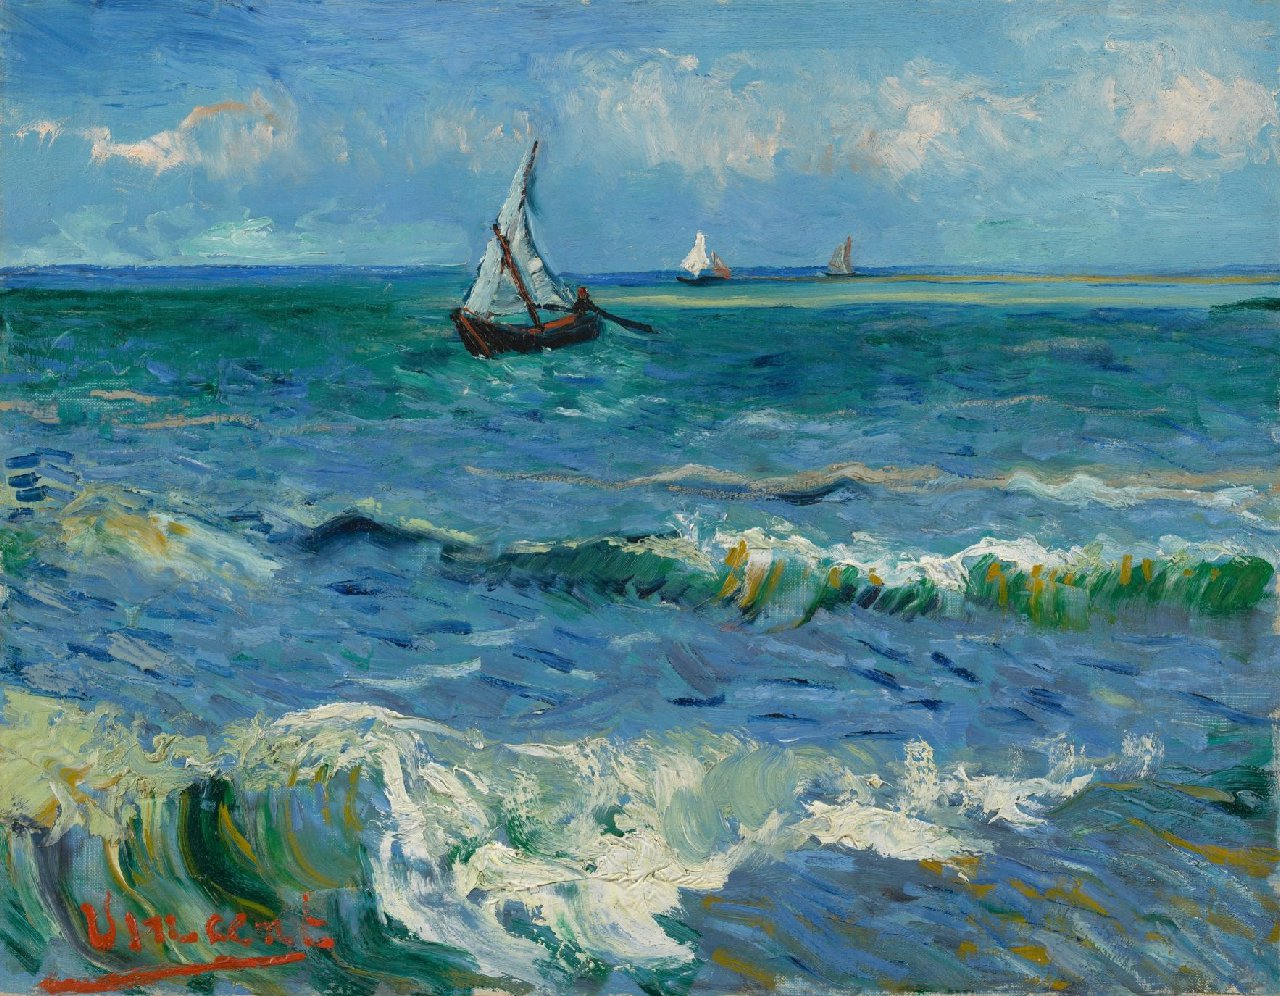 Van Gogh’un ünlü tablosu 'Les Saintes-Maries-de-la-Mer' animasyonlaştırıldı